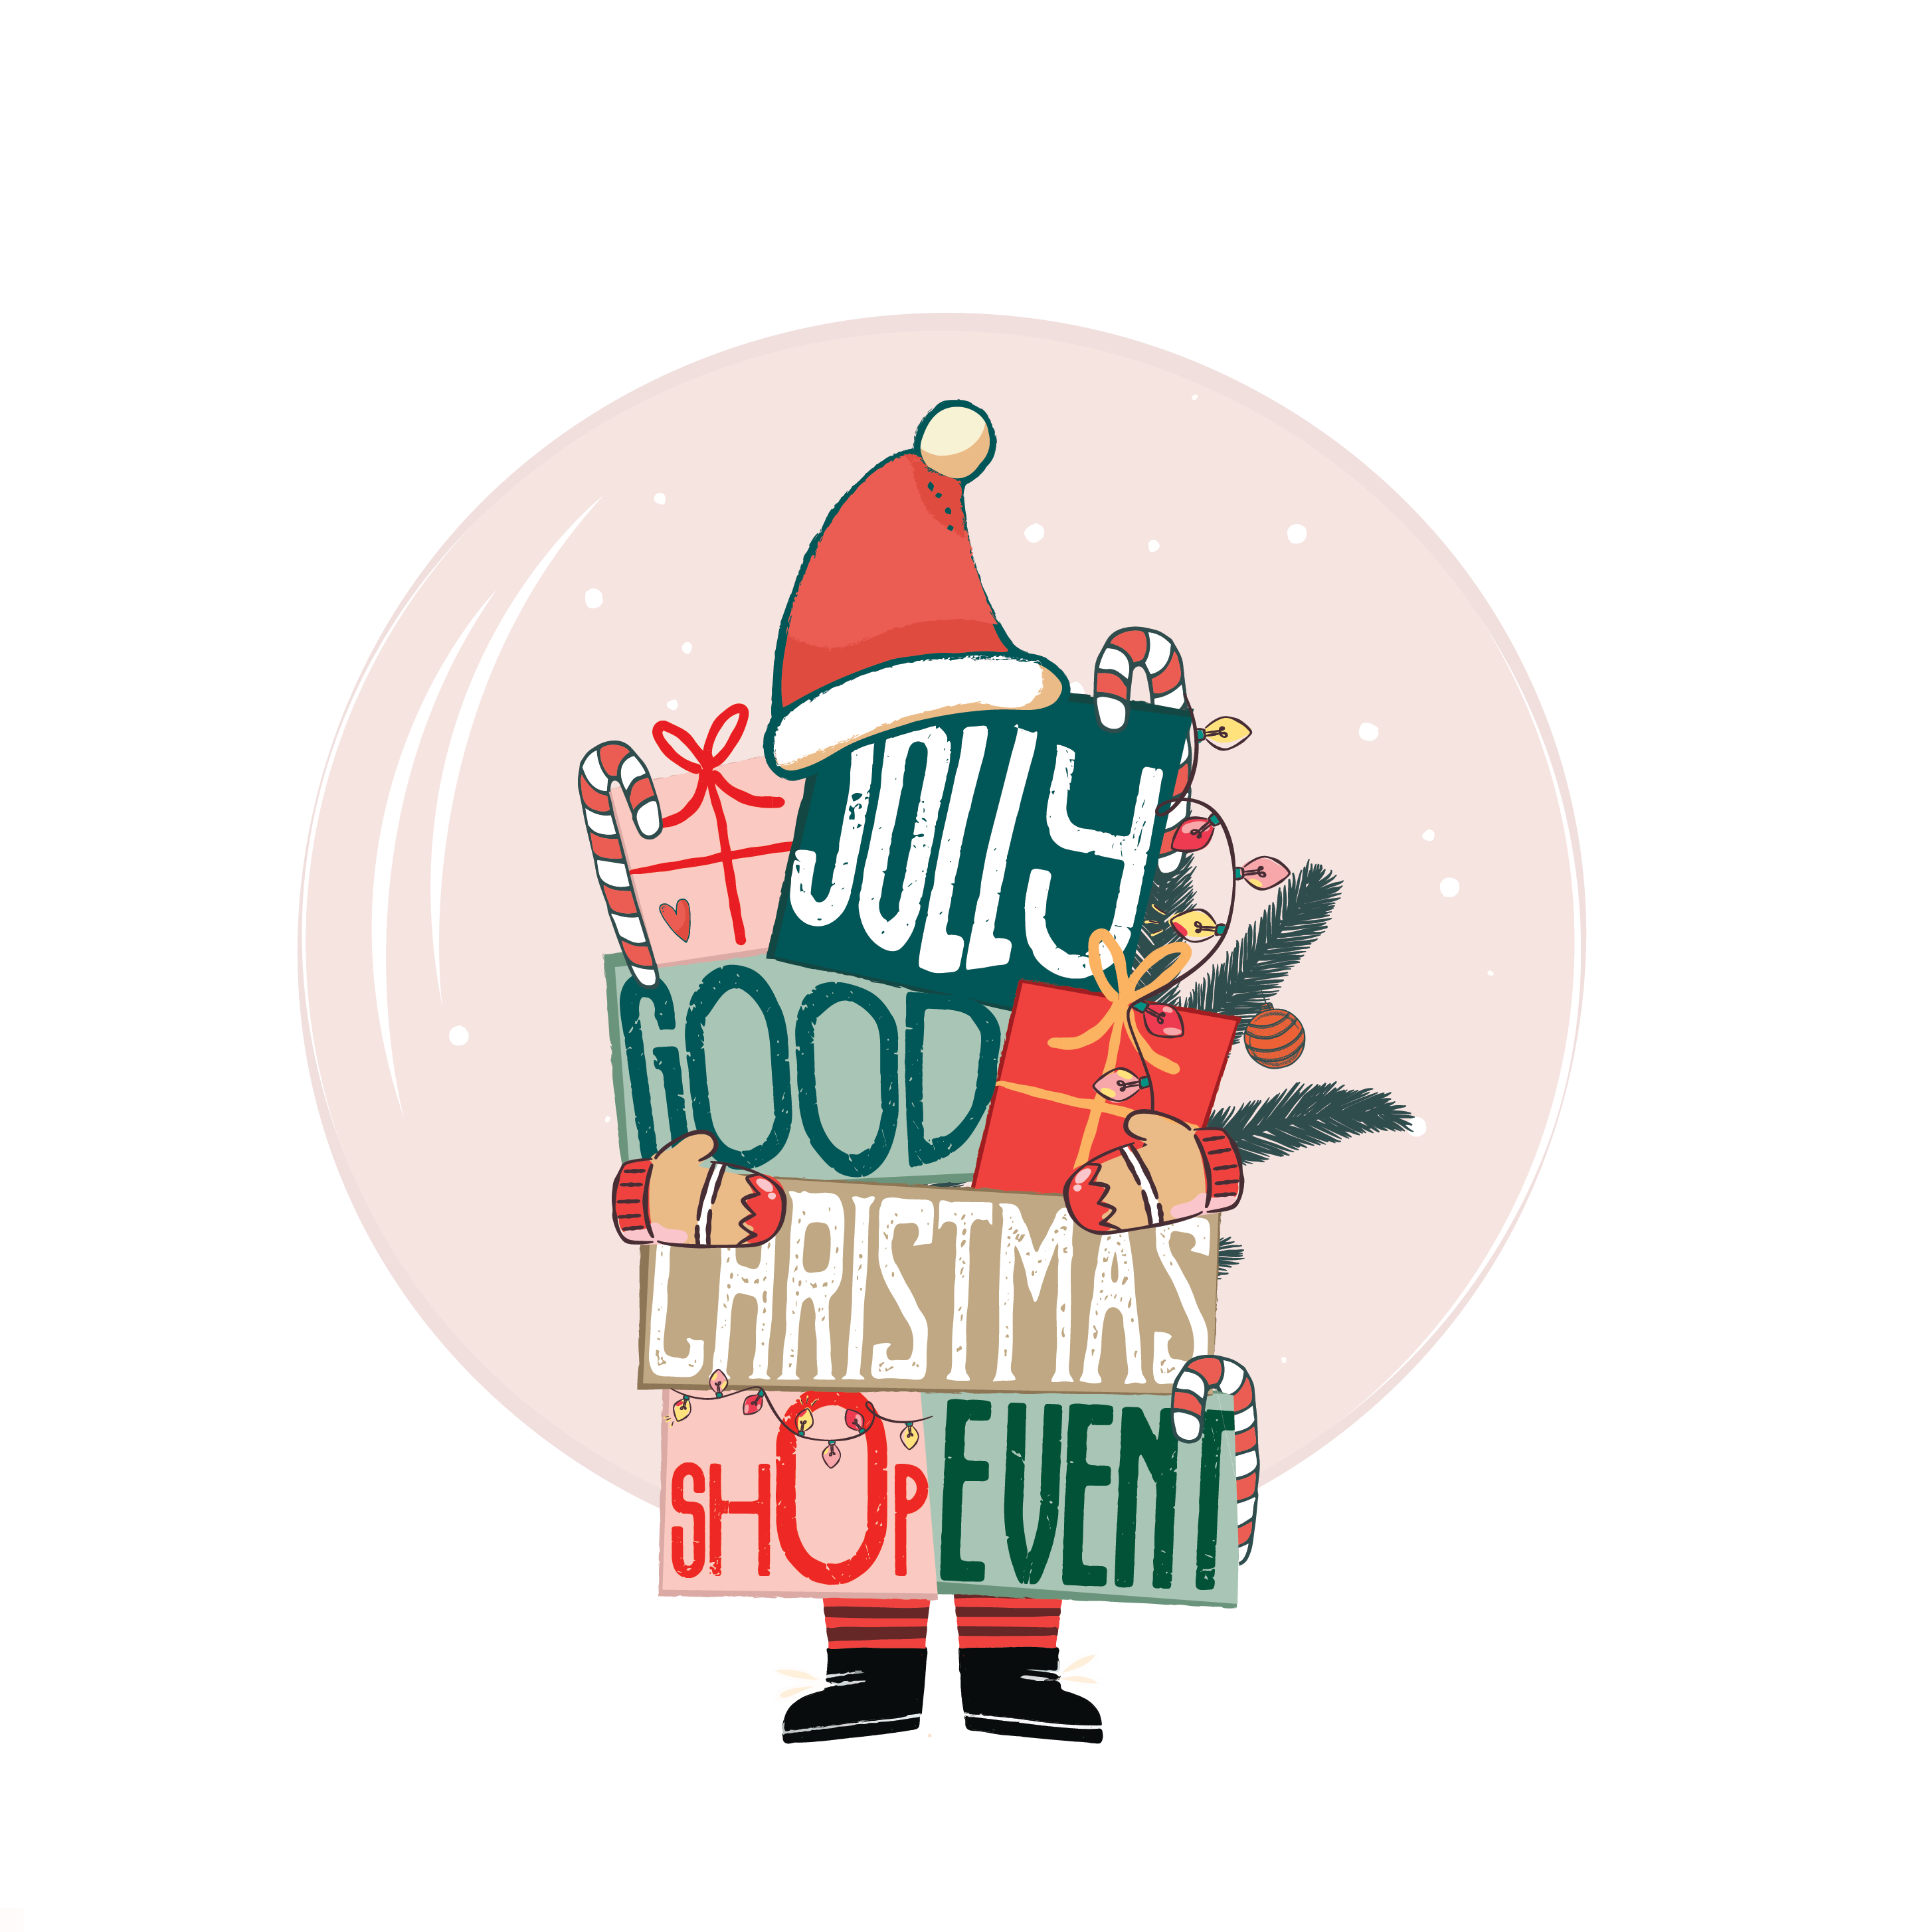 K'OOK! - Jolly Good Christmas Shop Event - 23 november - 20.00/22.00 uur